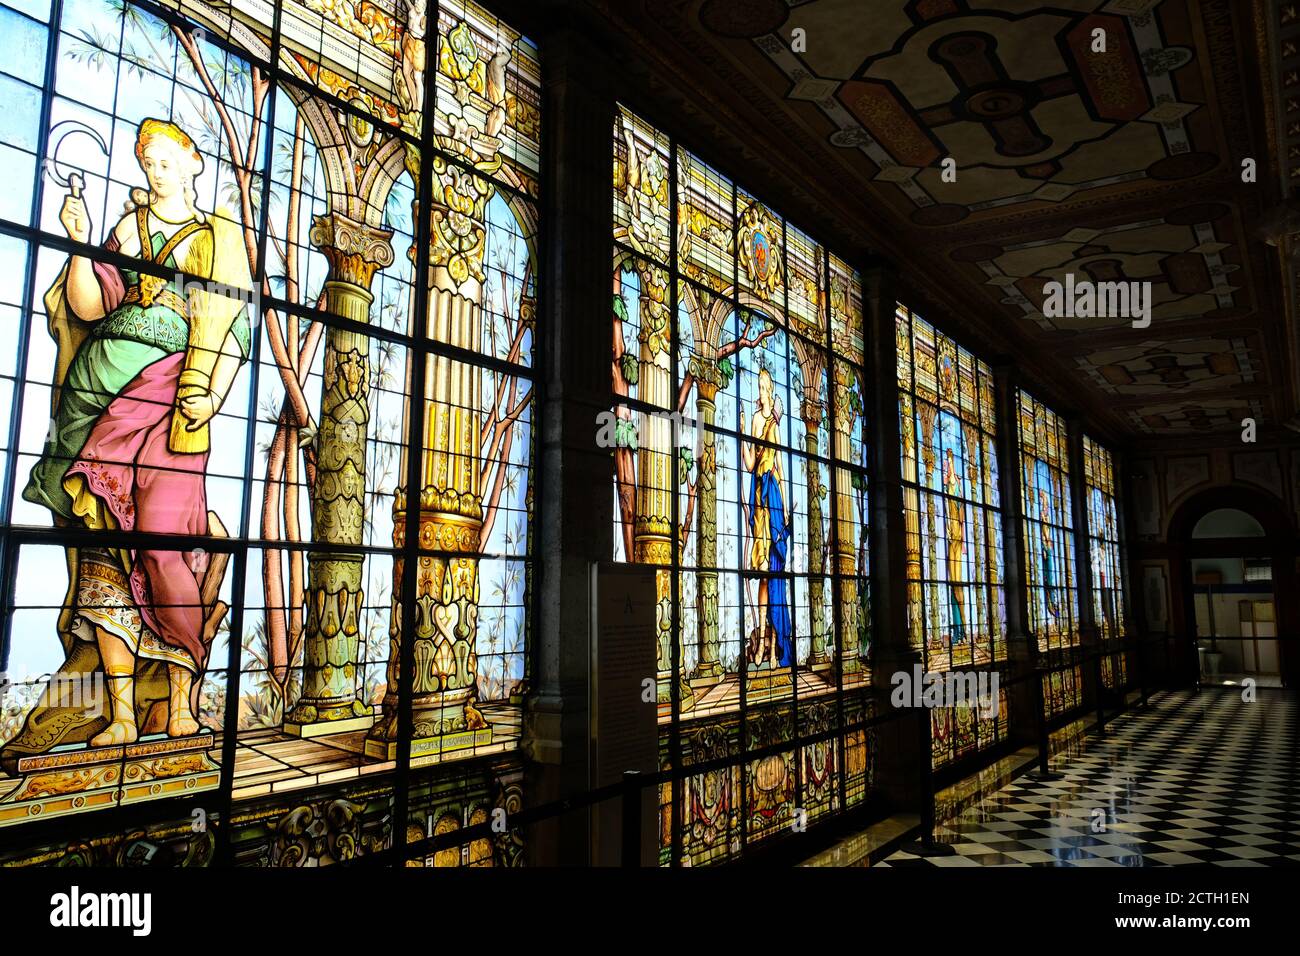 Mexico City - Chapultepec Castle stained glass window - Castillo de Chapultepec Stock Photo